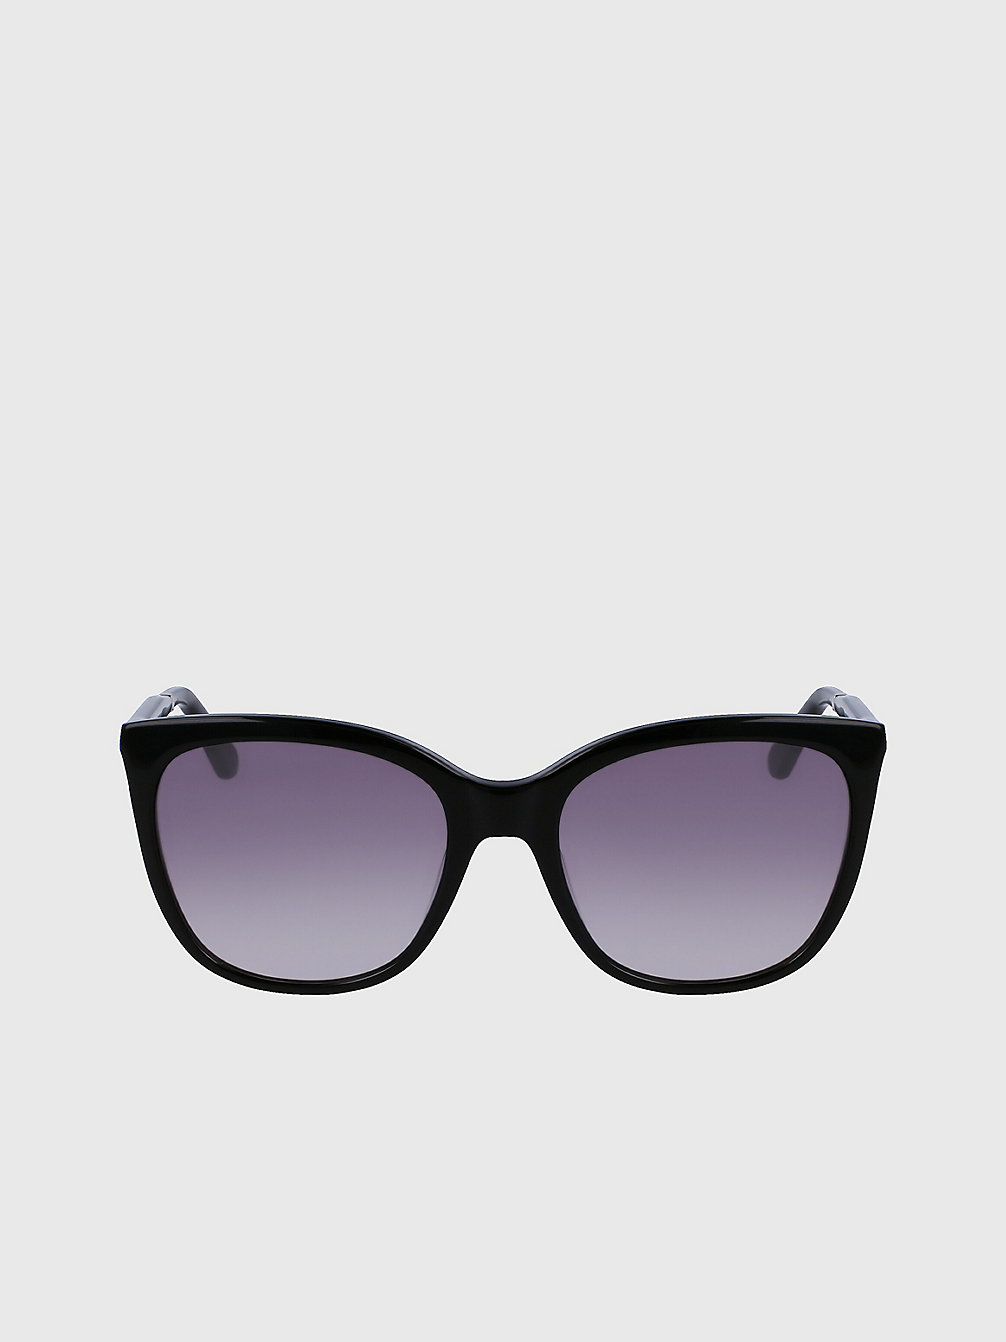 Women's Sunglasses - Cat Eye, Round & More | Calvin Klein®